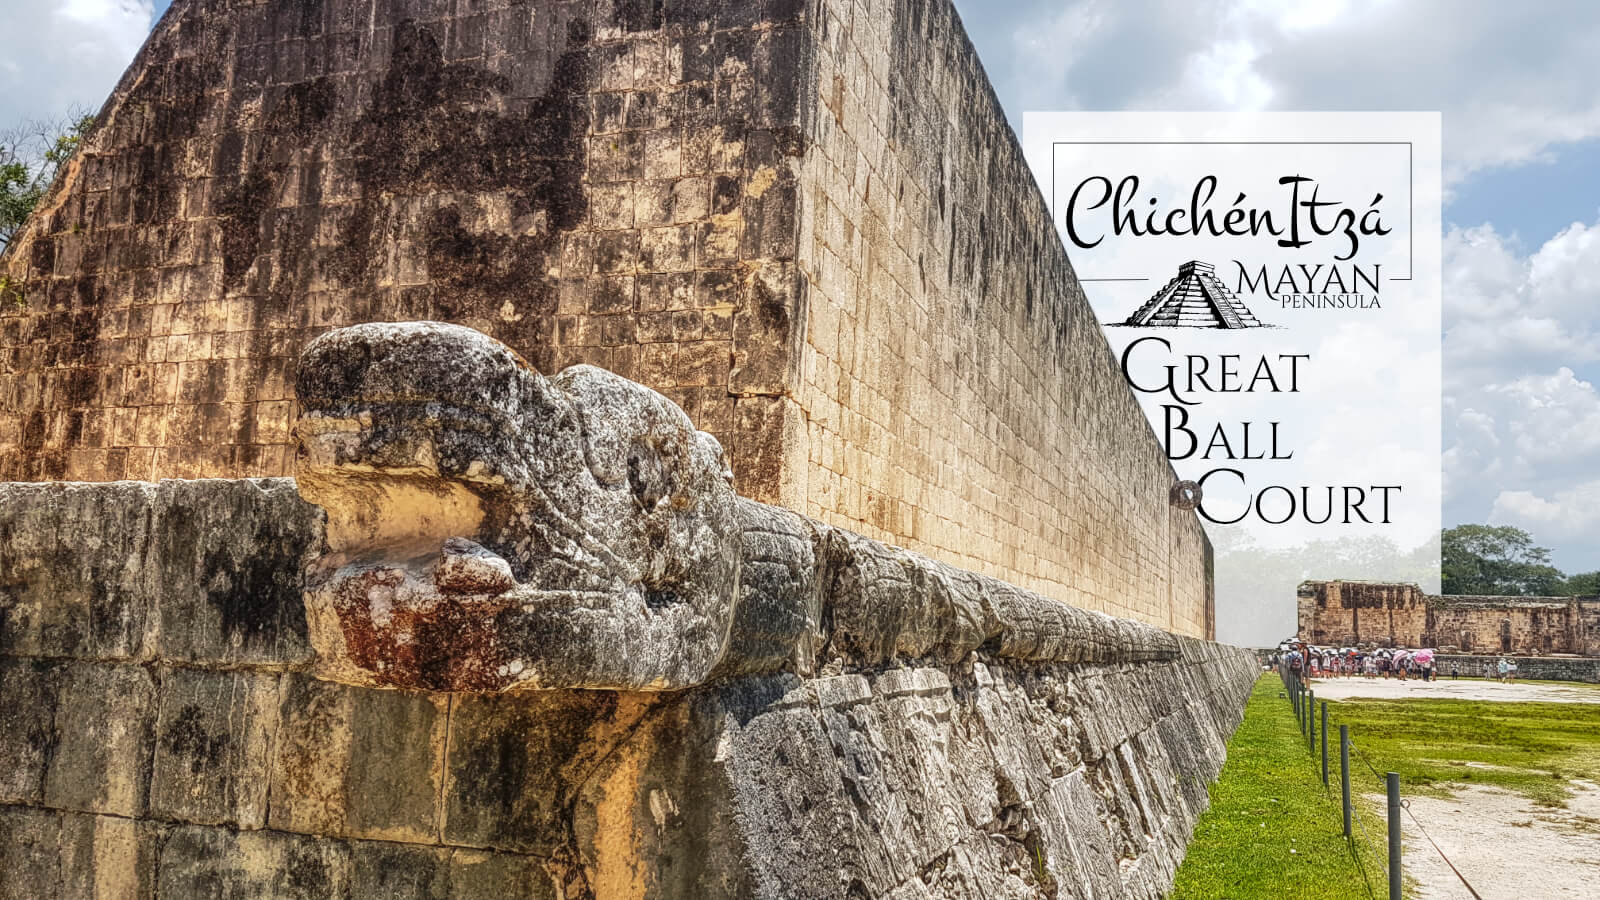 Great Ball Court in Chichén Itzá